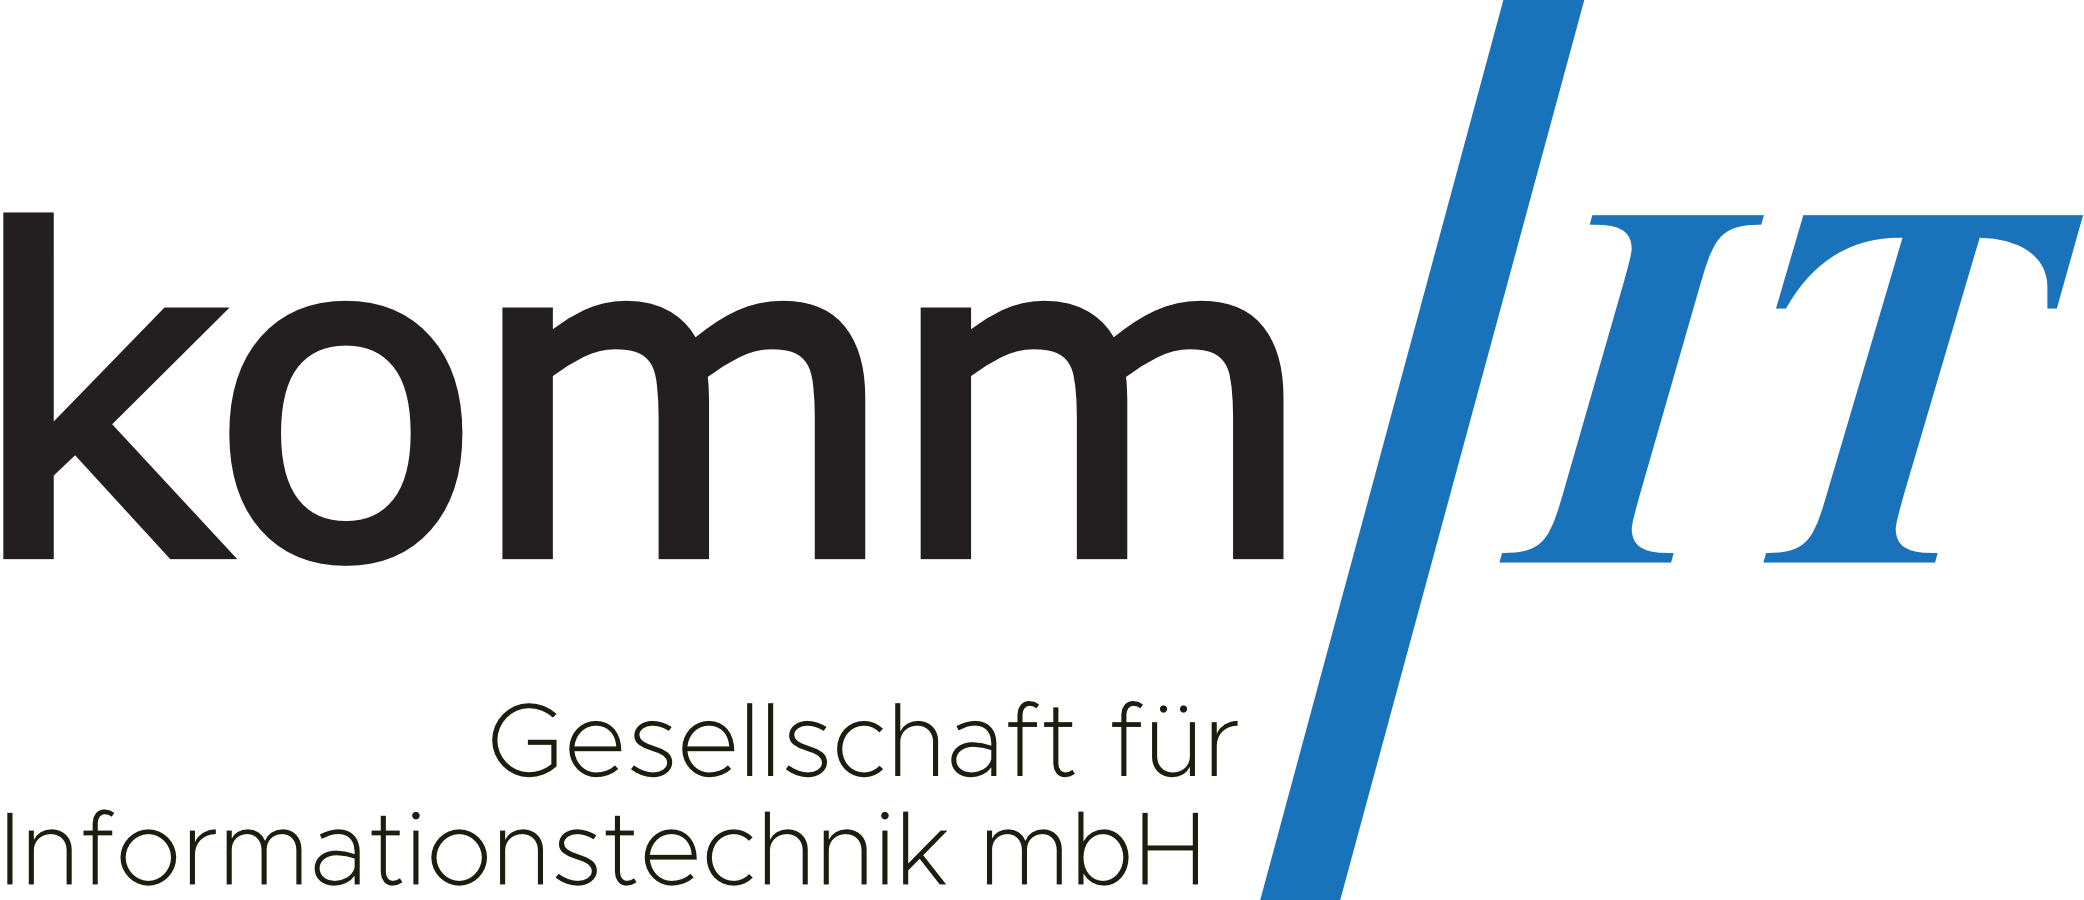 kommIT logo